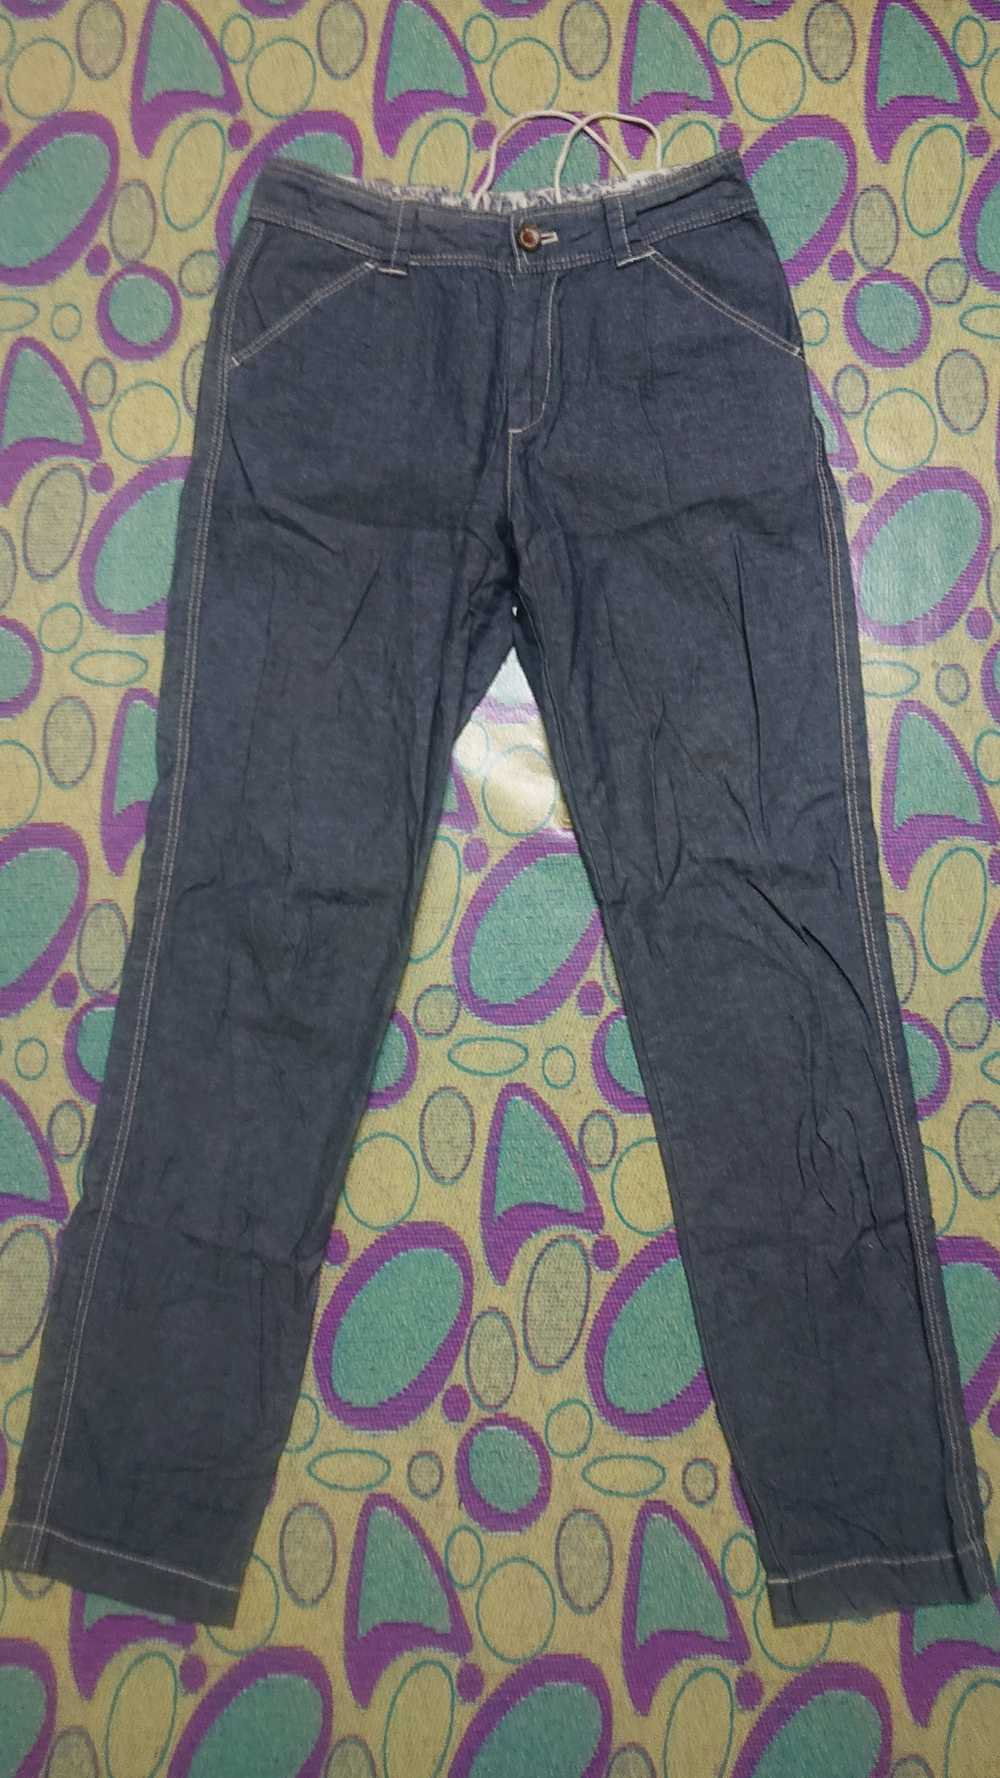 Japanese Brand ikka pants soft jeans - image 1